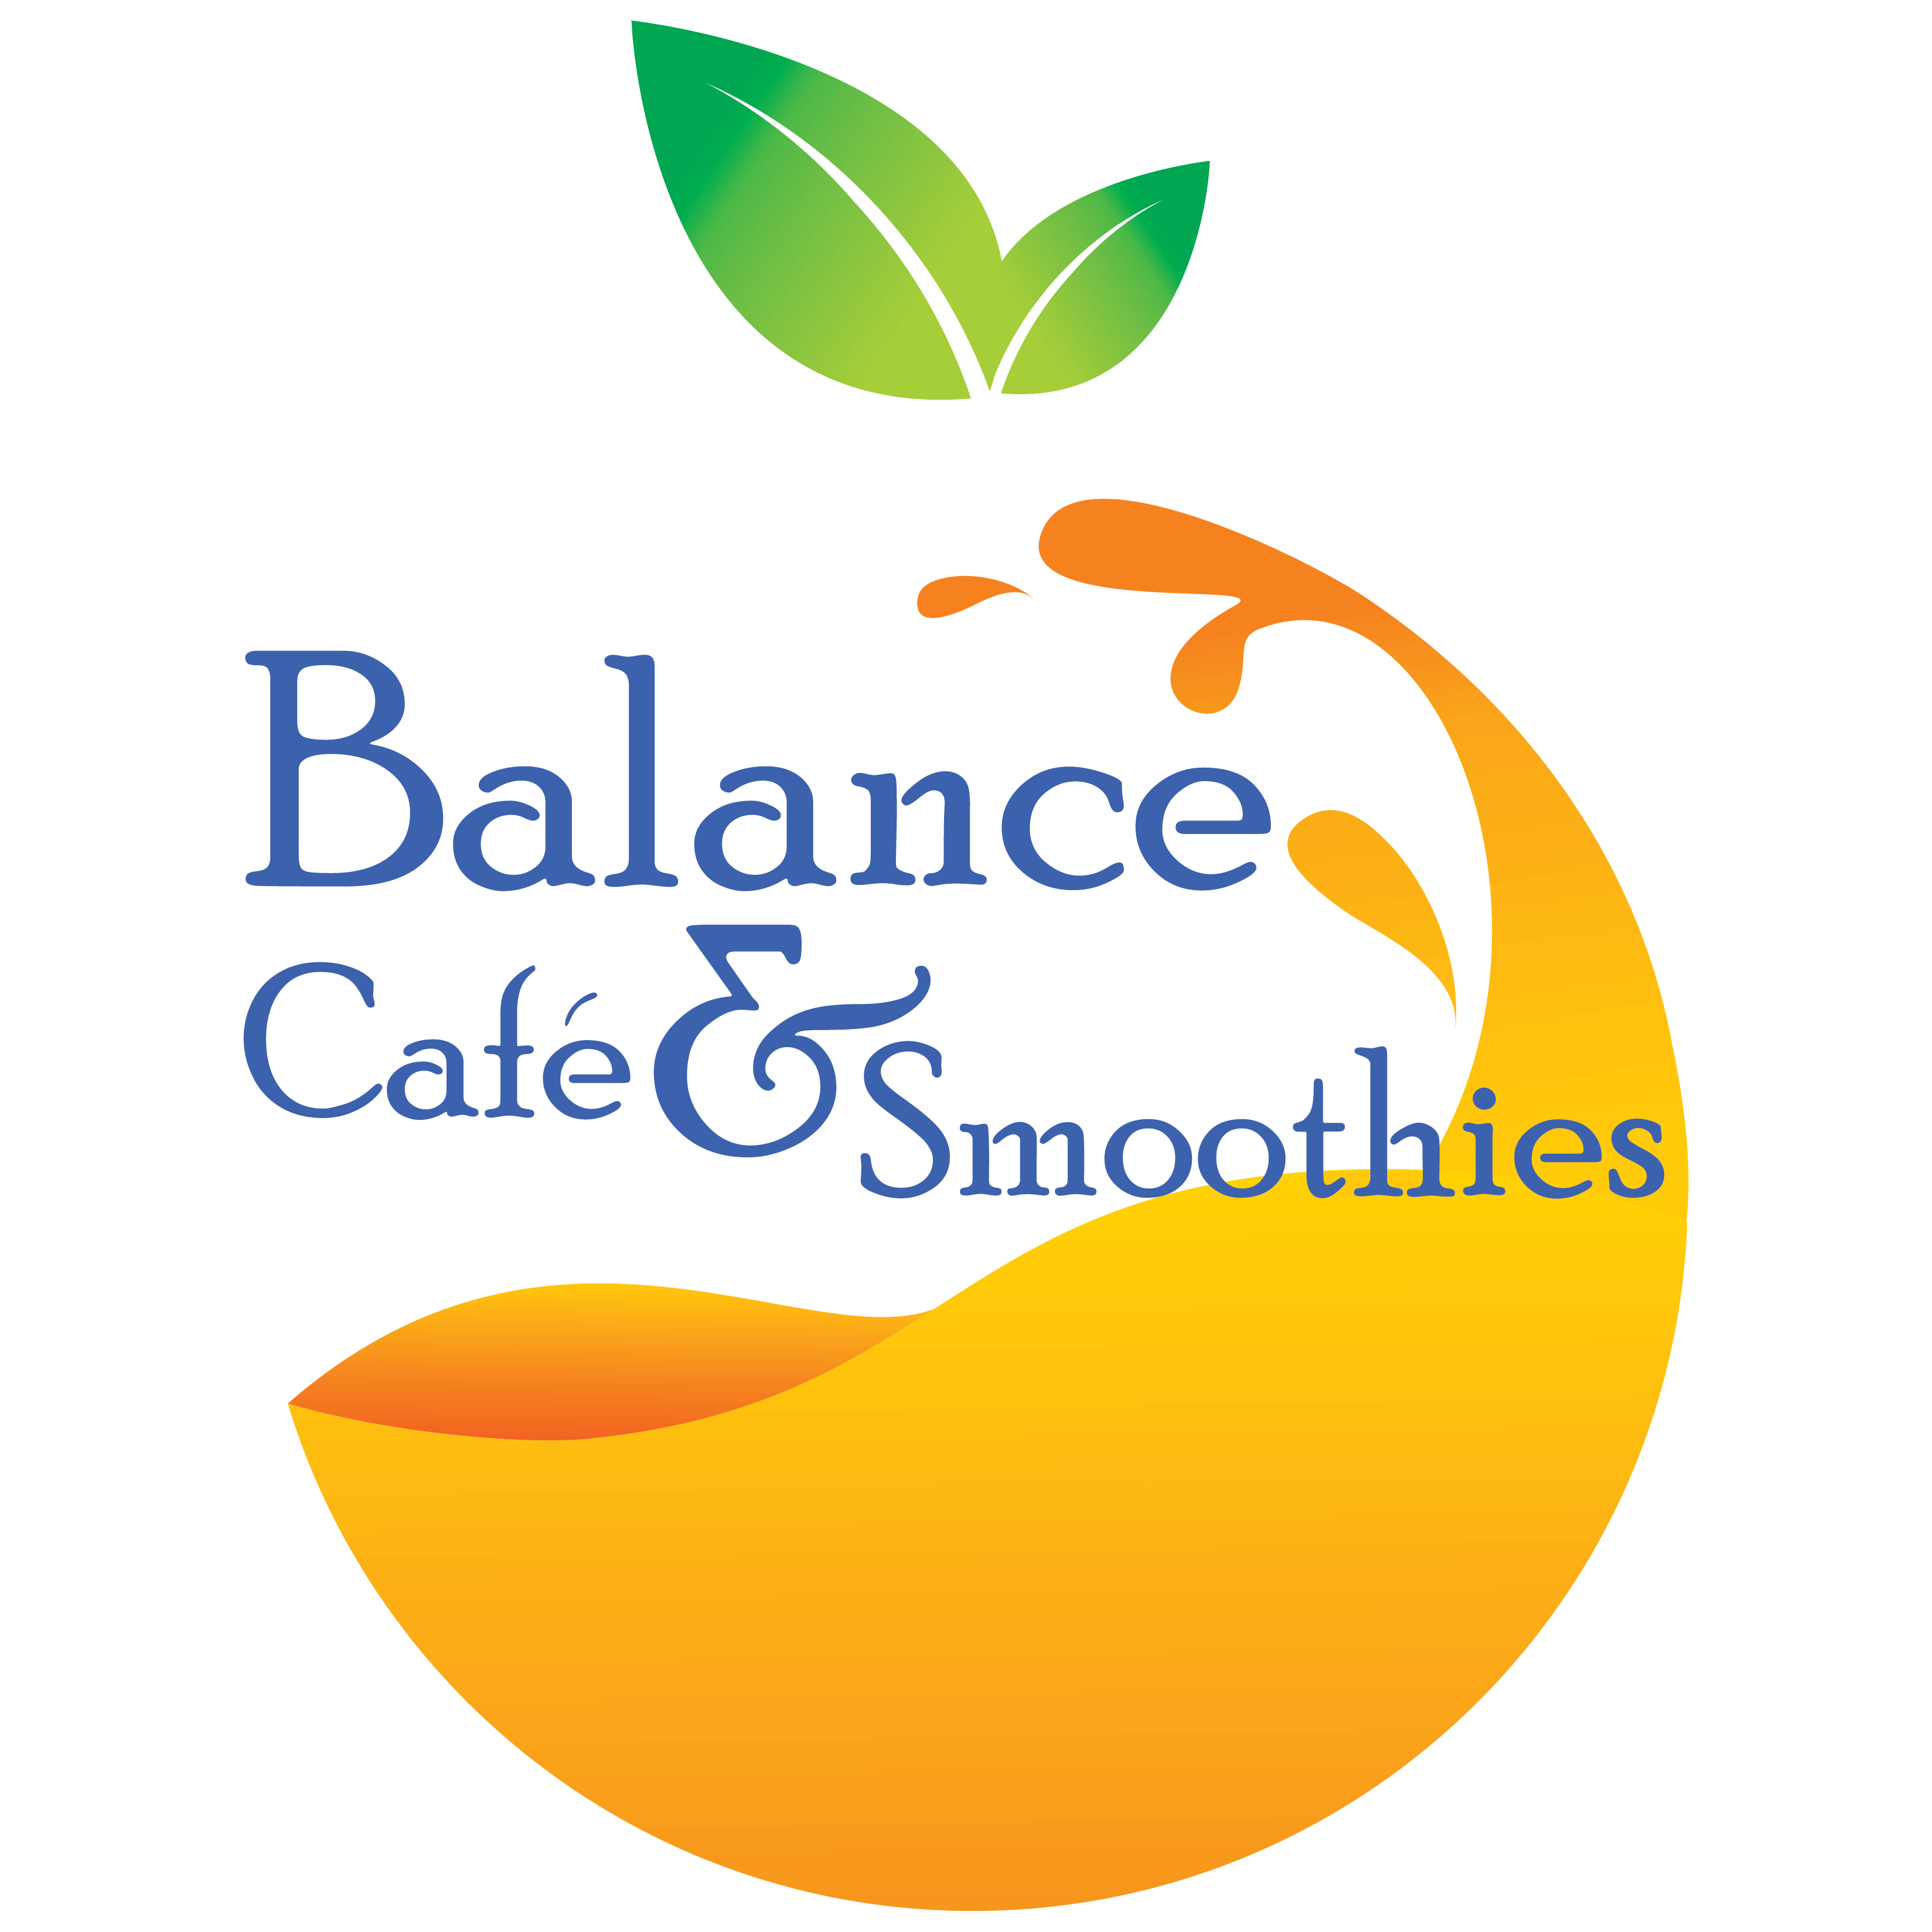 Balance Cafe' logo app